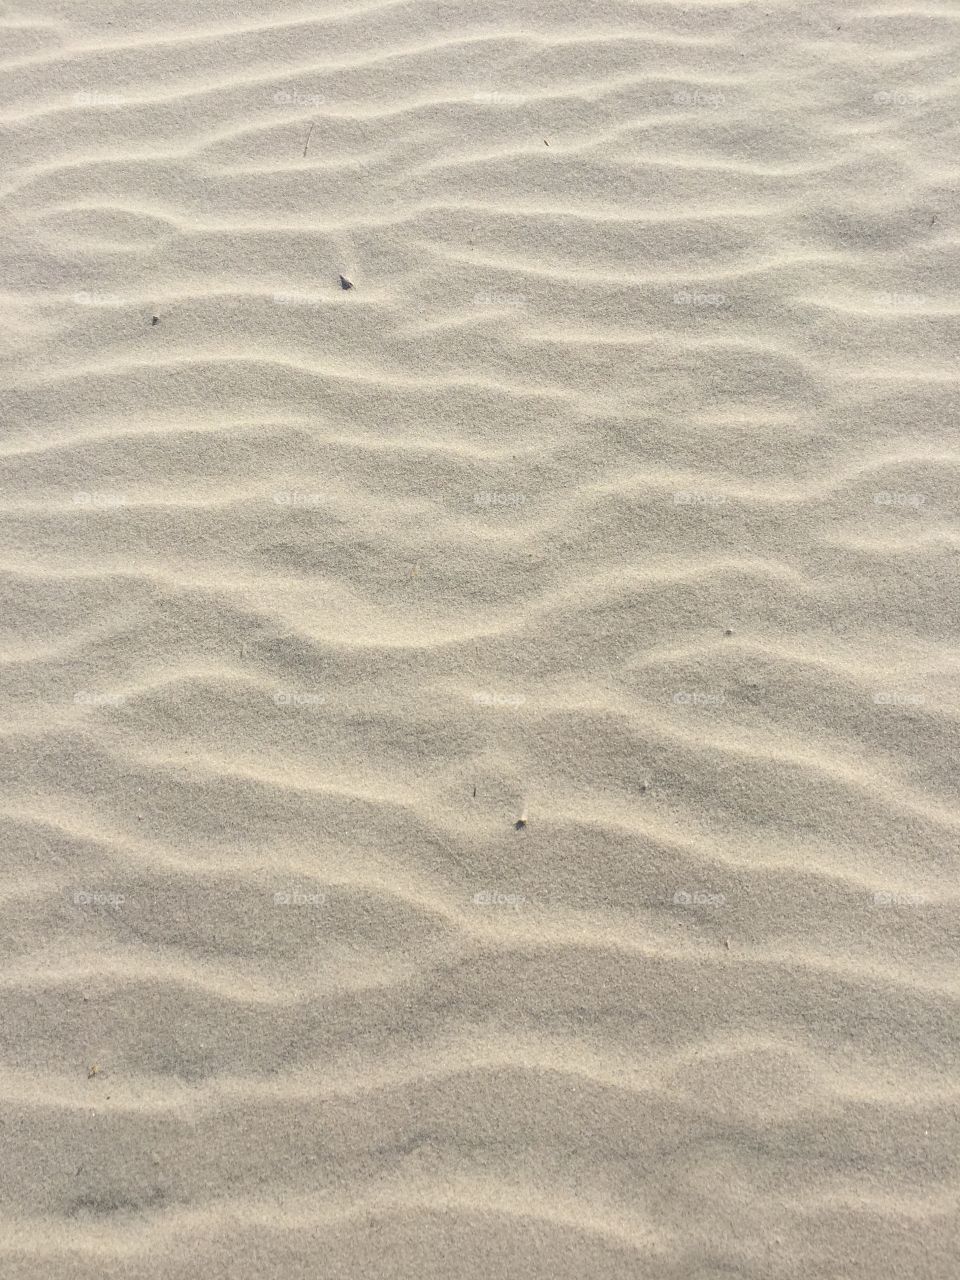 Windblown sand